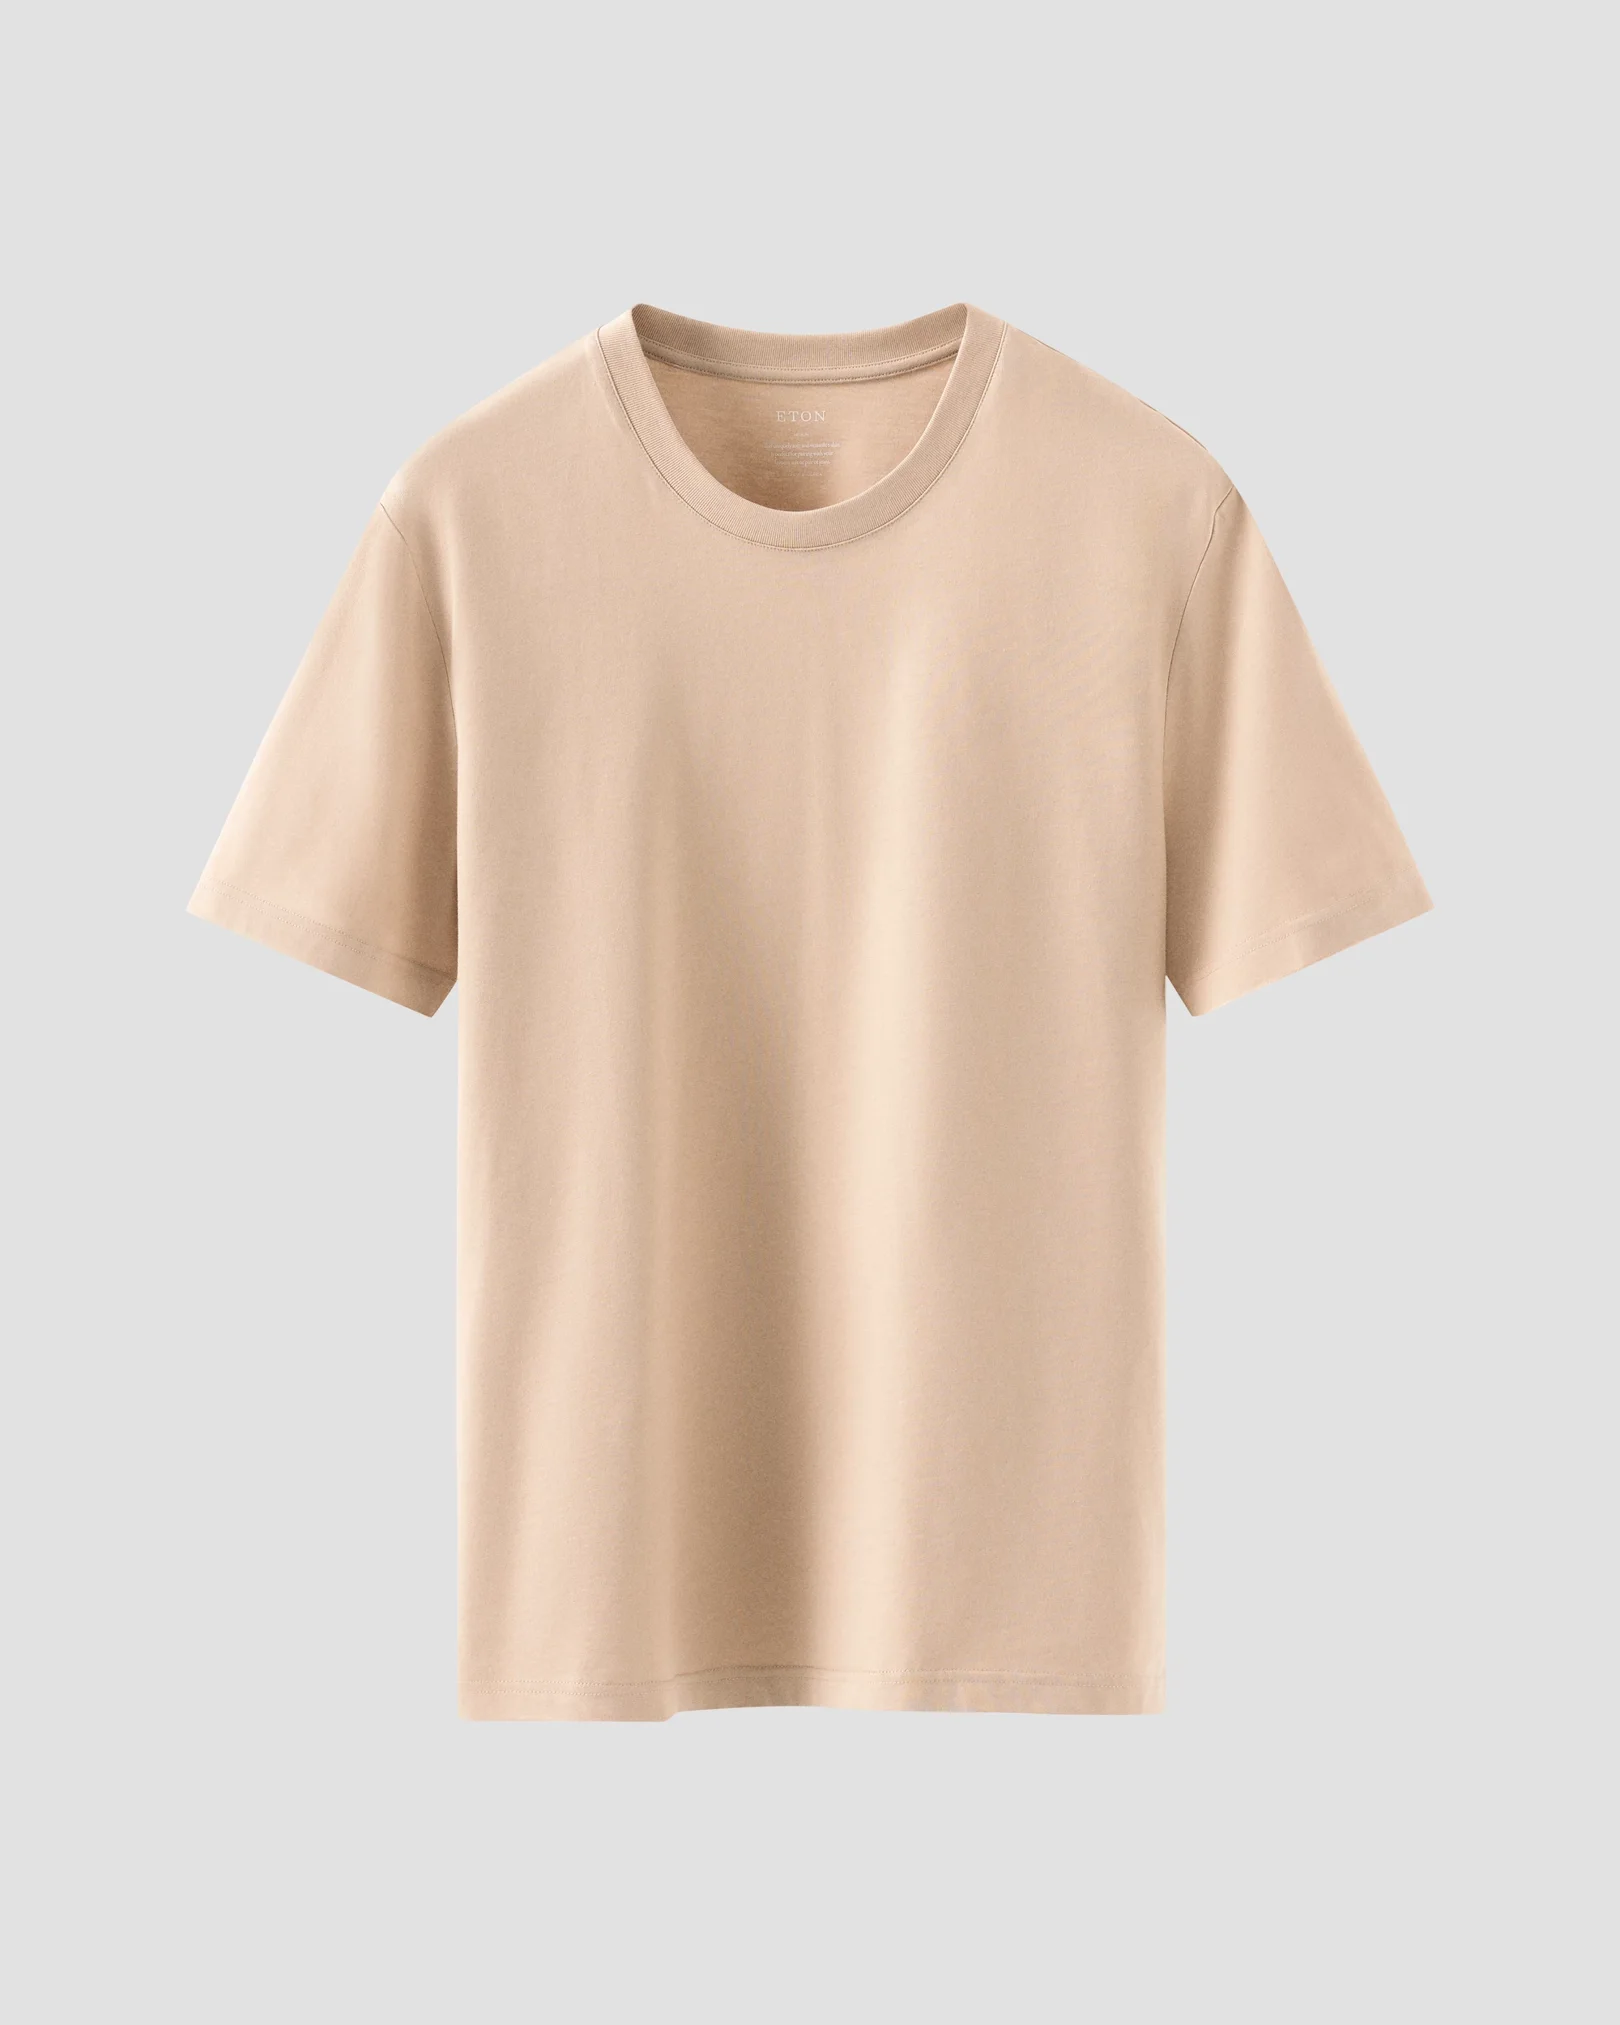 Eton - beige crew neck short sleeve t shirt